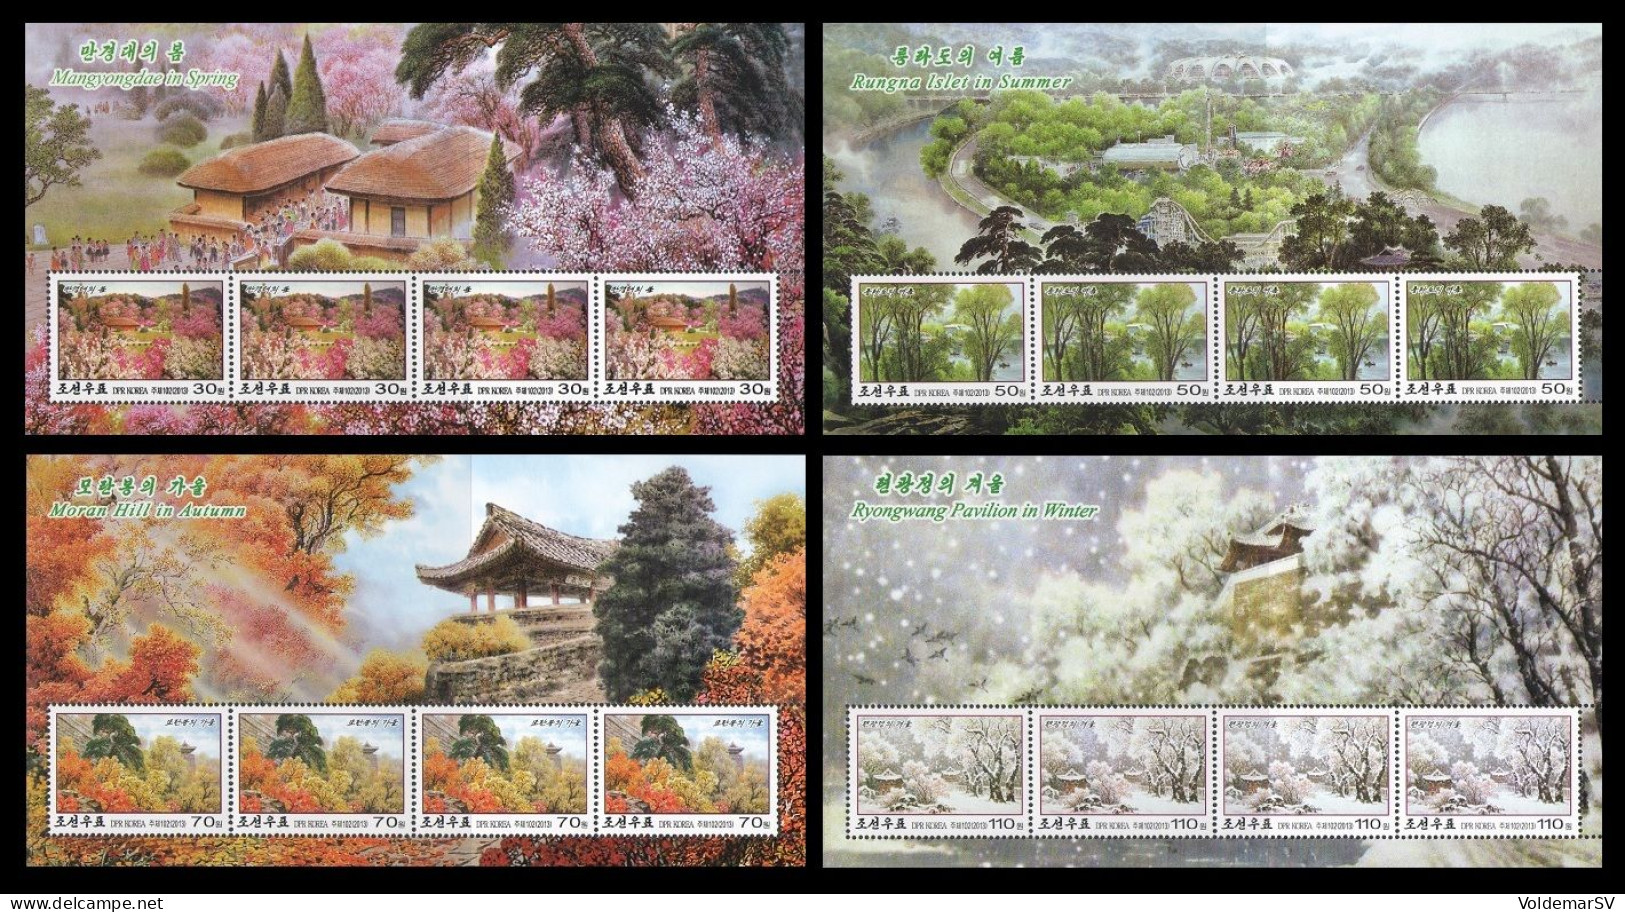 North Korea 2013 Mih. 6029/32 Four Seasons (4 M/S) MNH ** - Corée Du Nord